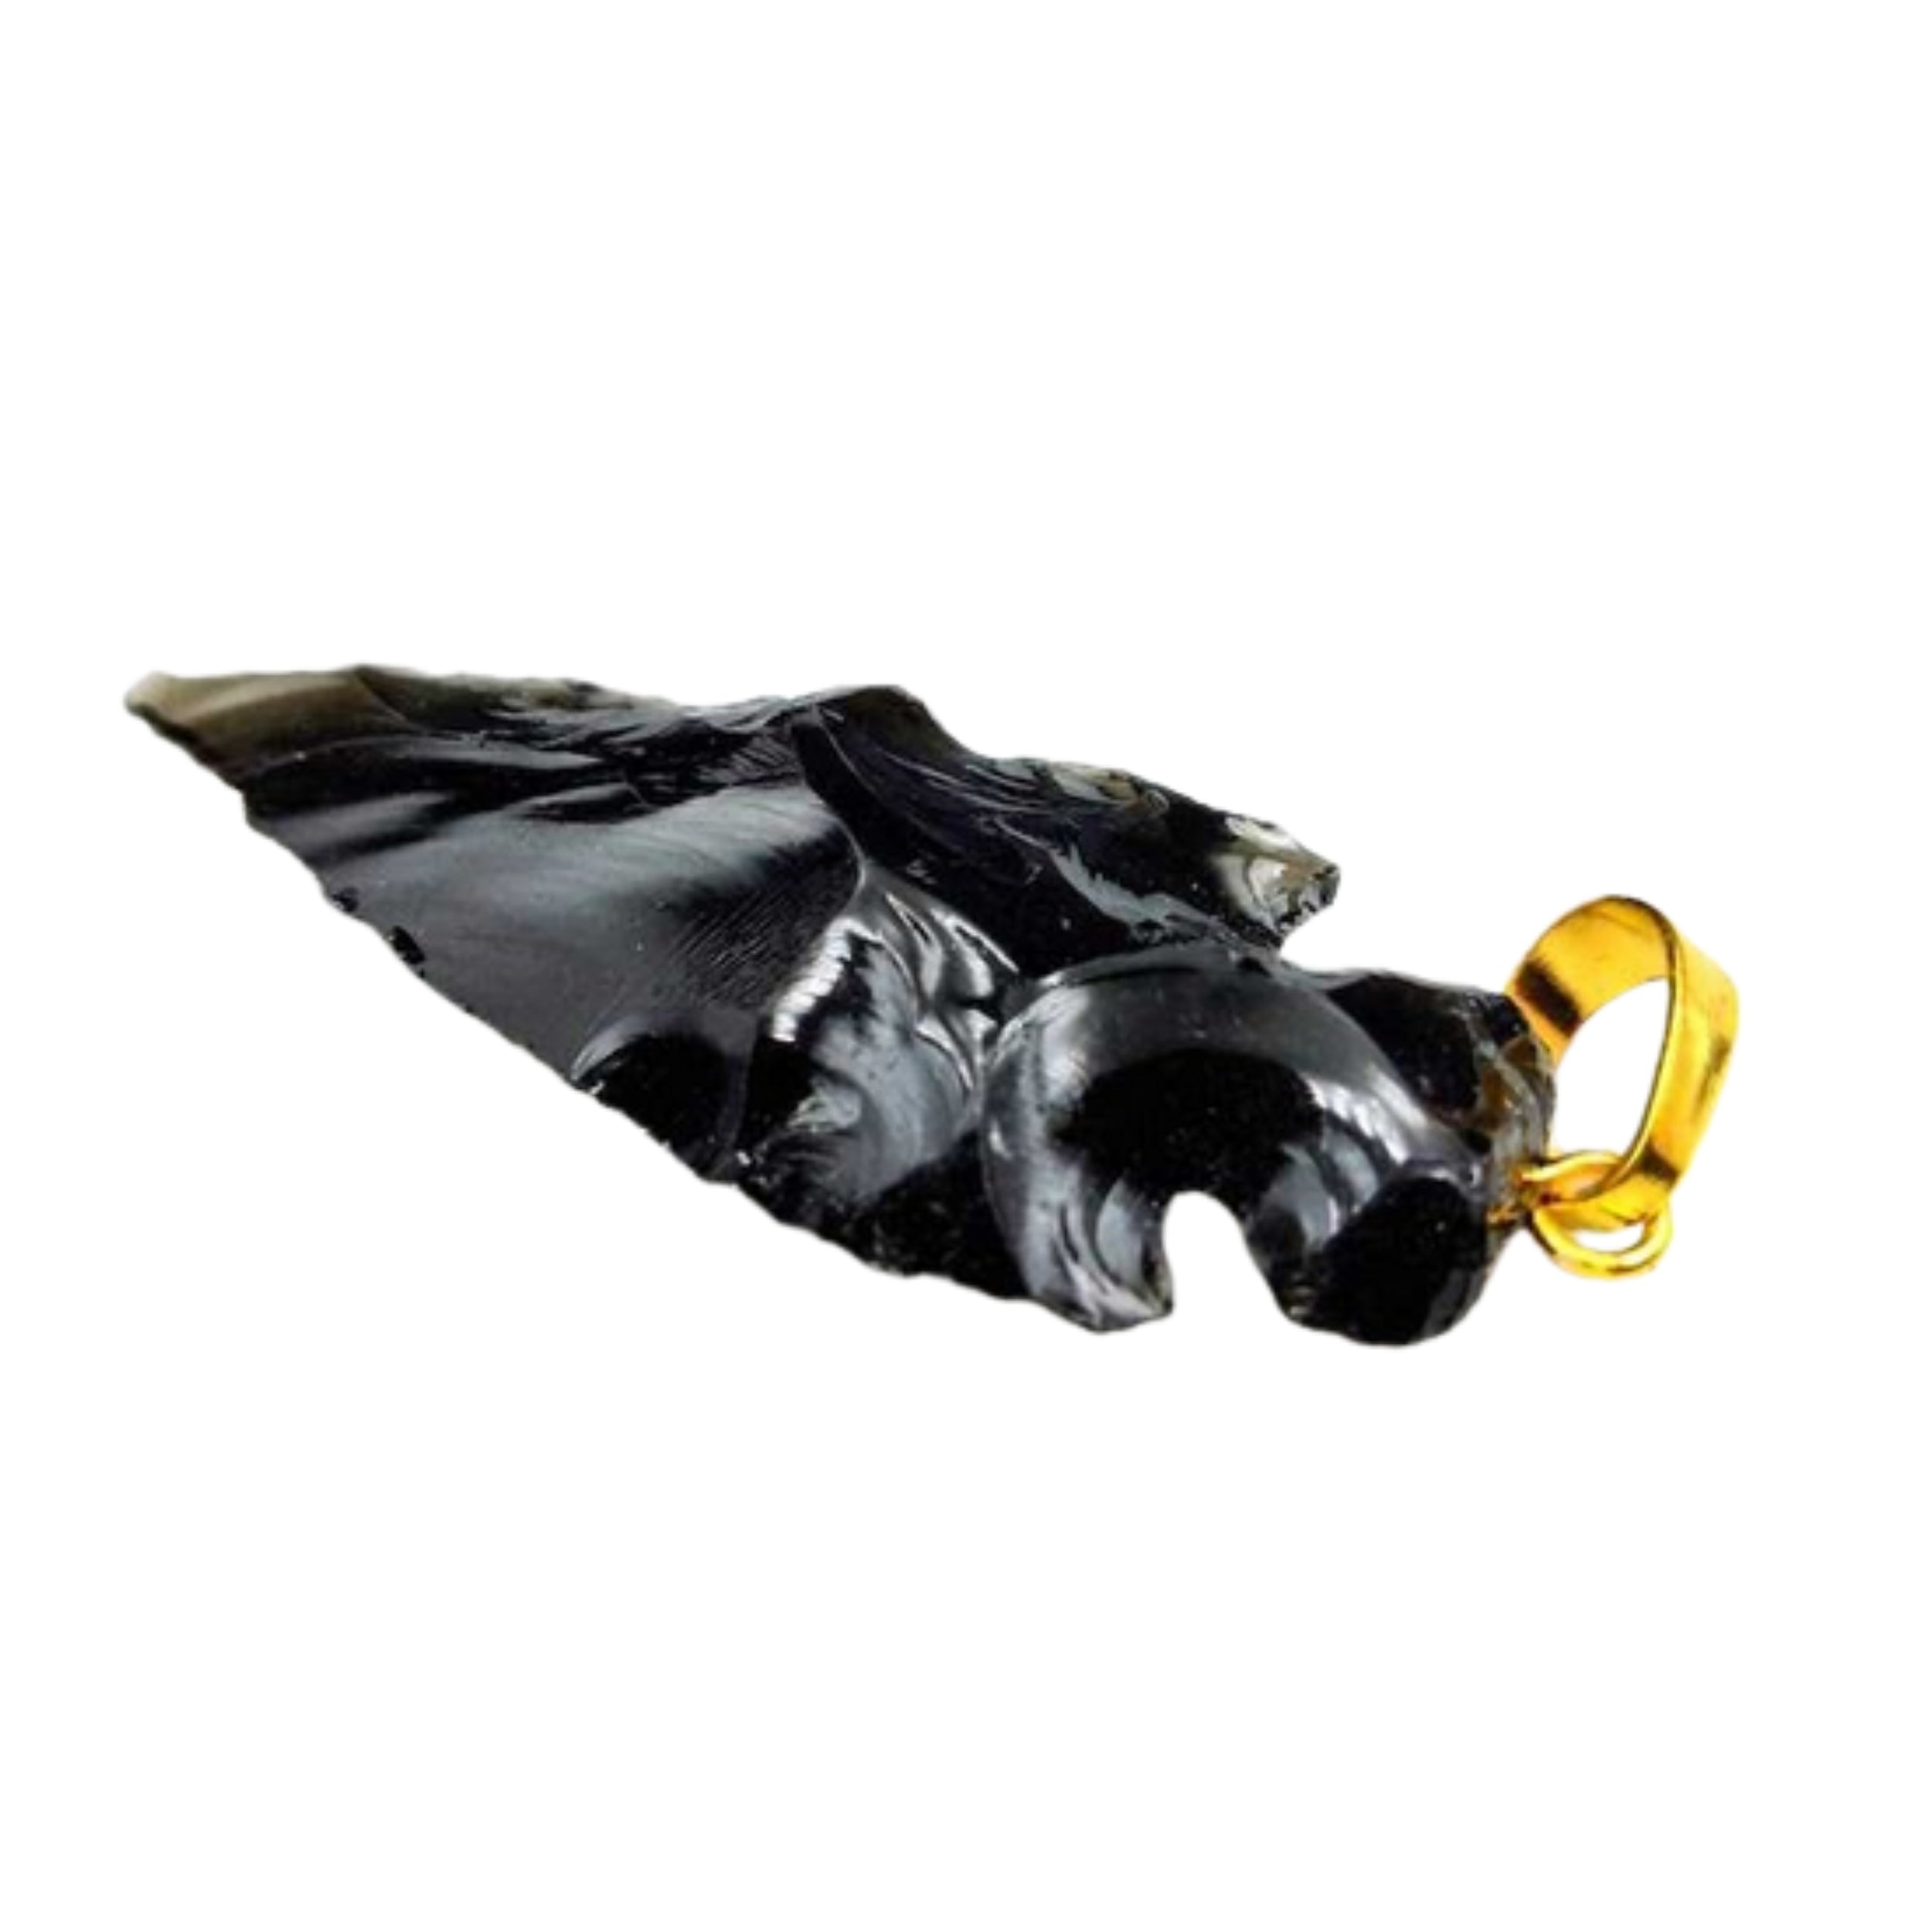 Collier pointe de flèche en obsidienne (verrredragon de Game of Thrones) de 4 cm,ARROW, noir et or avec lacet cuir …